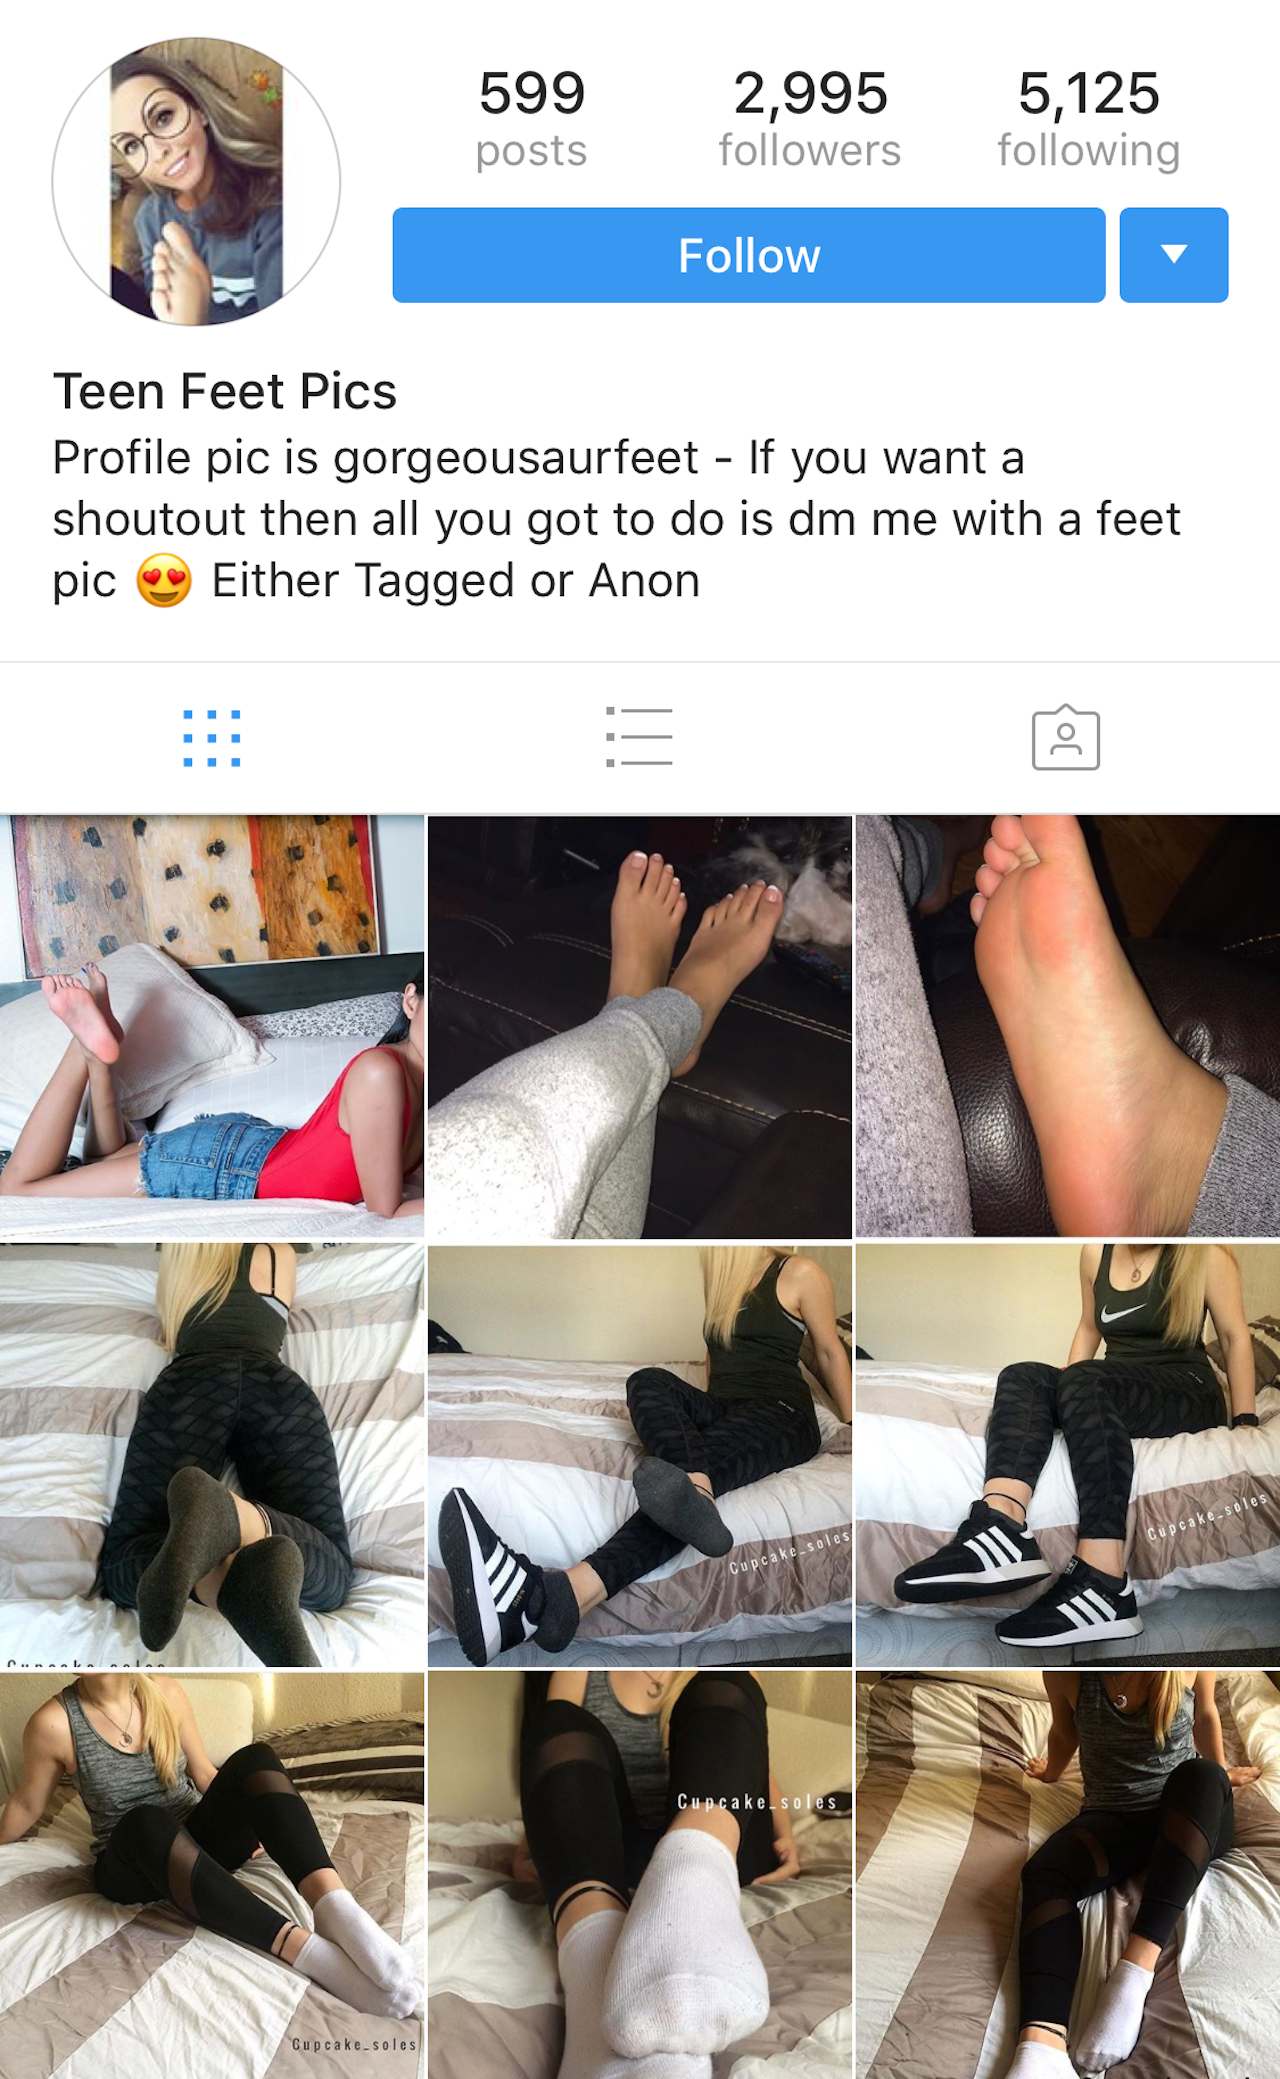 Celebrity Footjob Girl - Inside Instagram's foot fetish community | The Outline